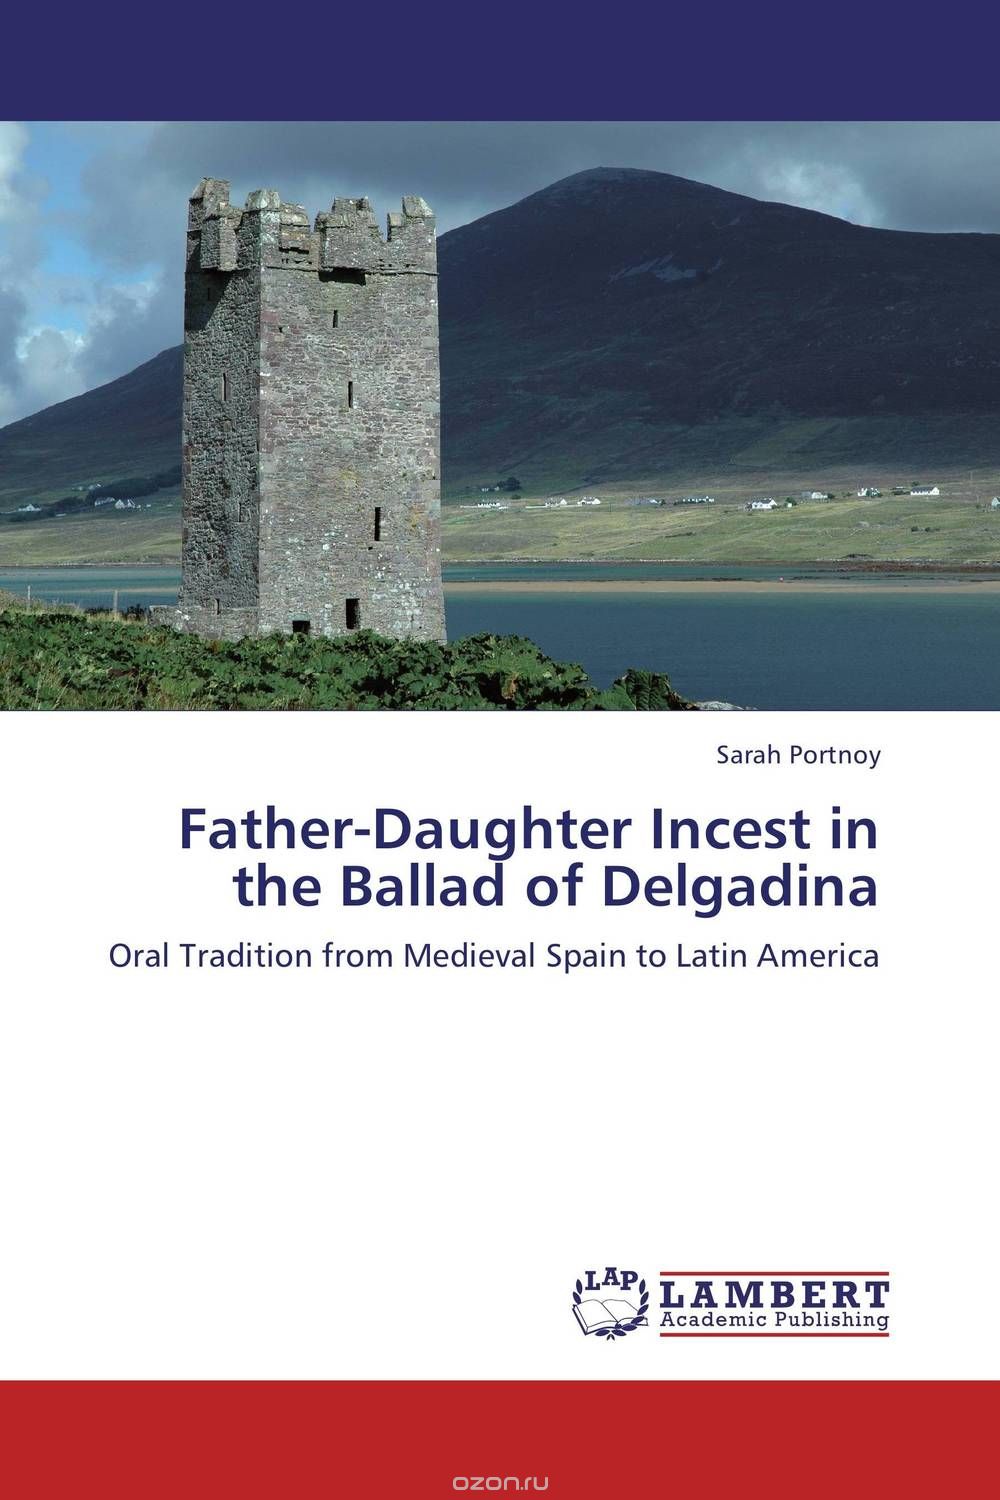 Скачать книгу "Father-Daughter Incest in the Ballad of Delgadina"